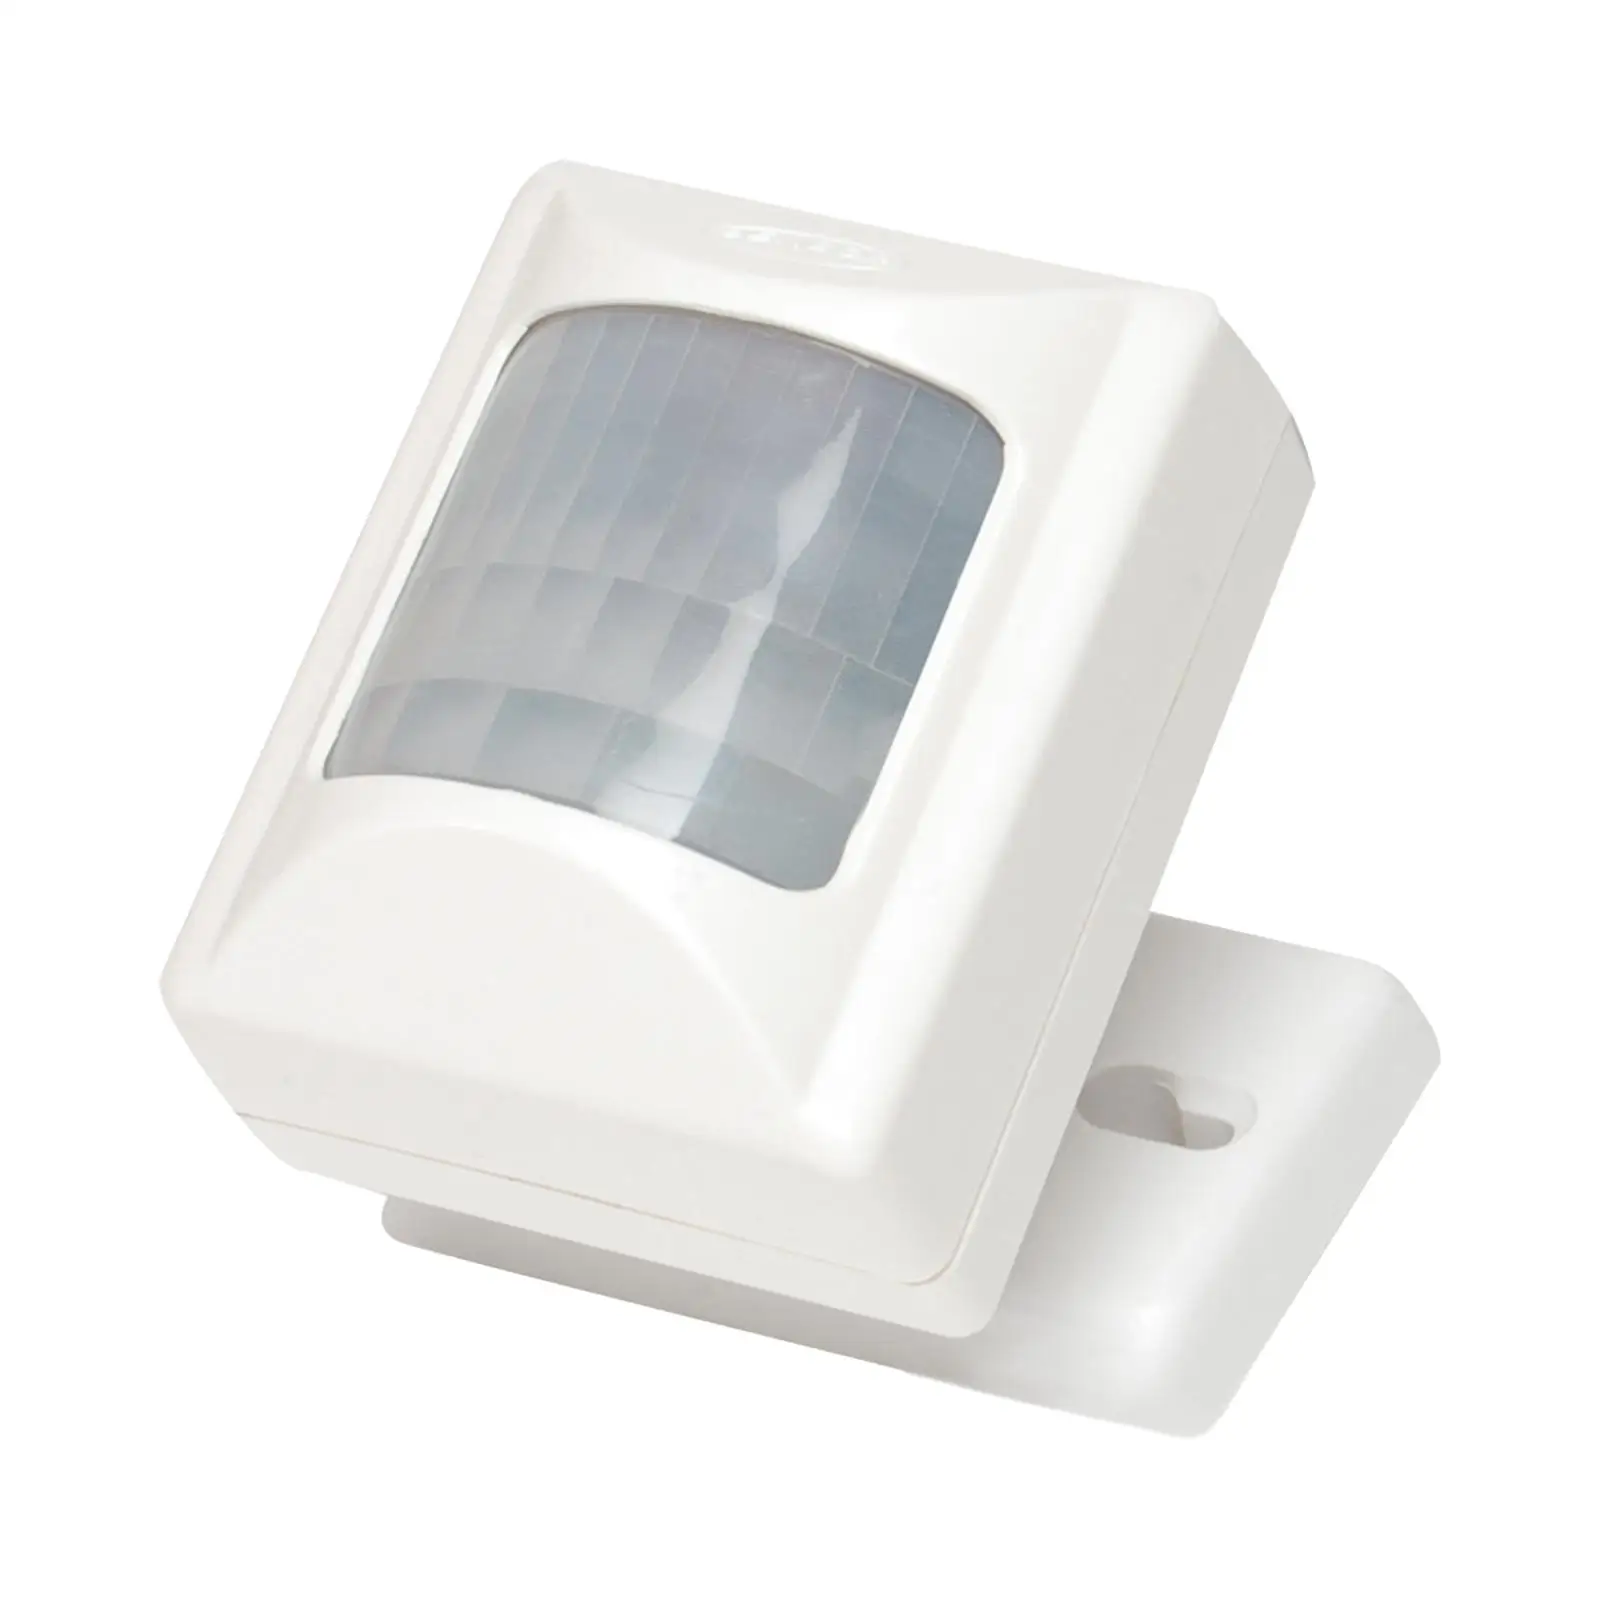 Automatic Electric Urinal Flush Valve Sensor Urinal Accessories Wall Mounted Urinal Sensor Waterproof for Toilet Bathroom